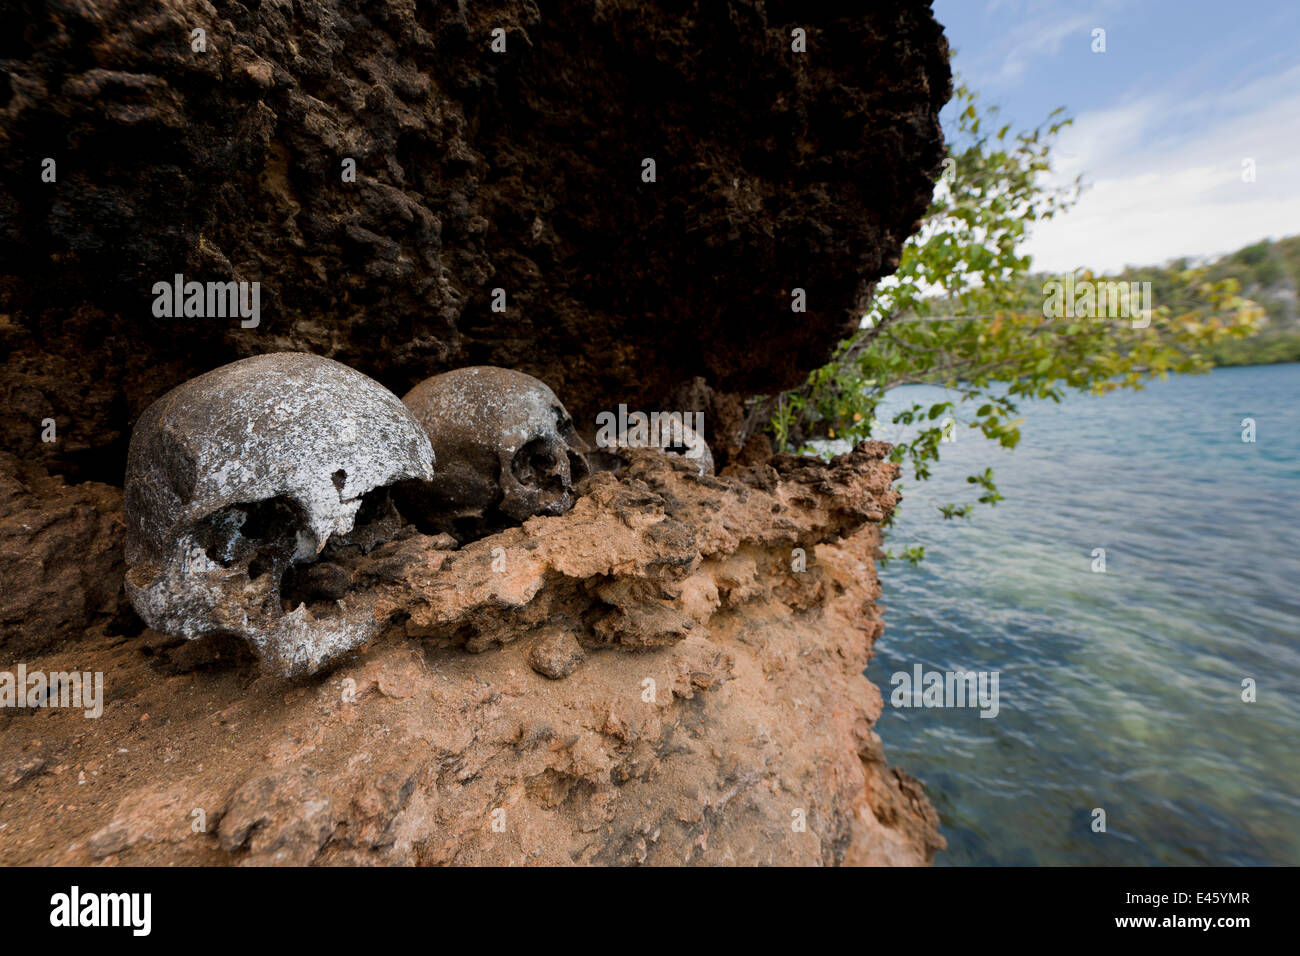 Very old human skulls on a ledge in the karst limestone walls of a Raja Ampat island. Raja Ampat, West Papua, Indonesia, February 2010 Stock Photo